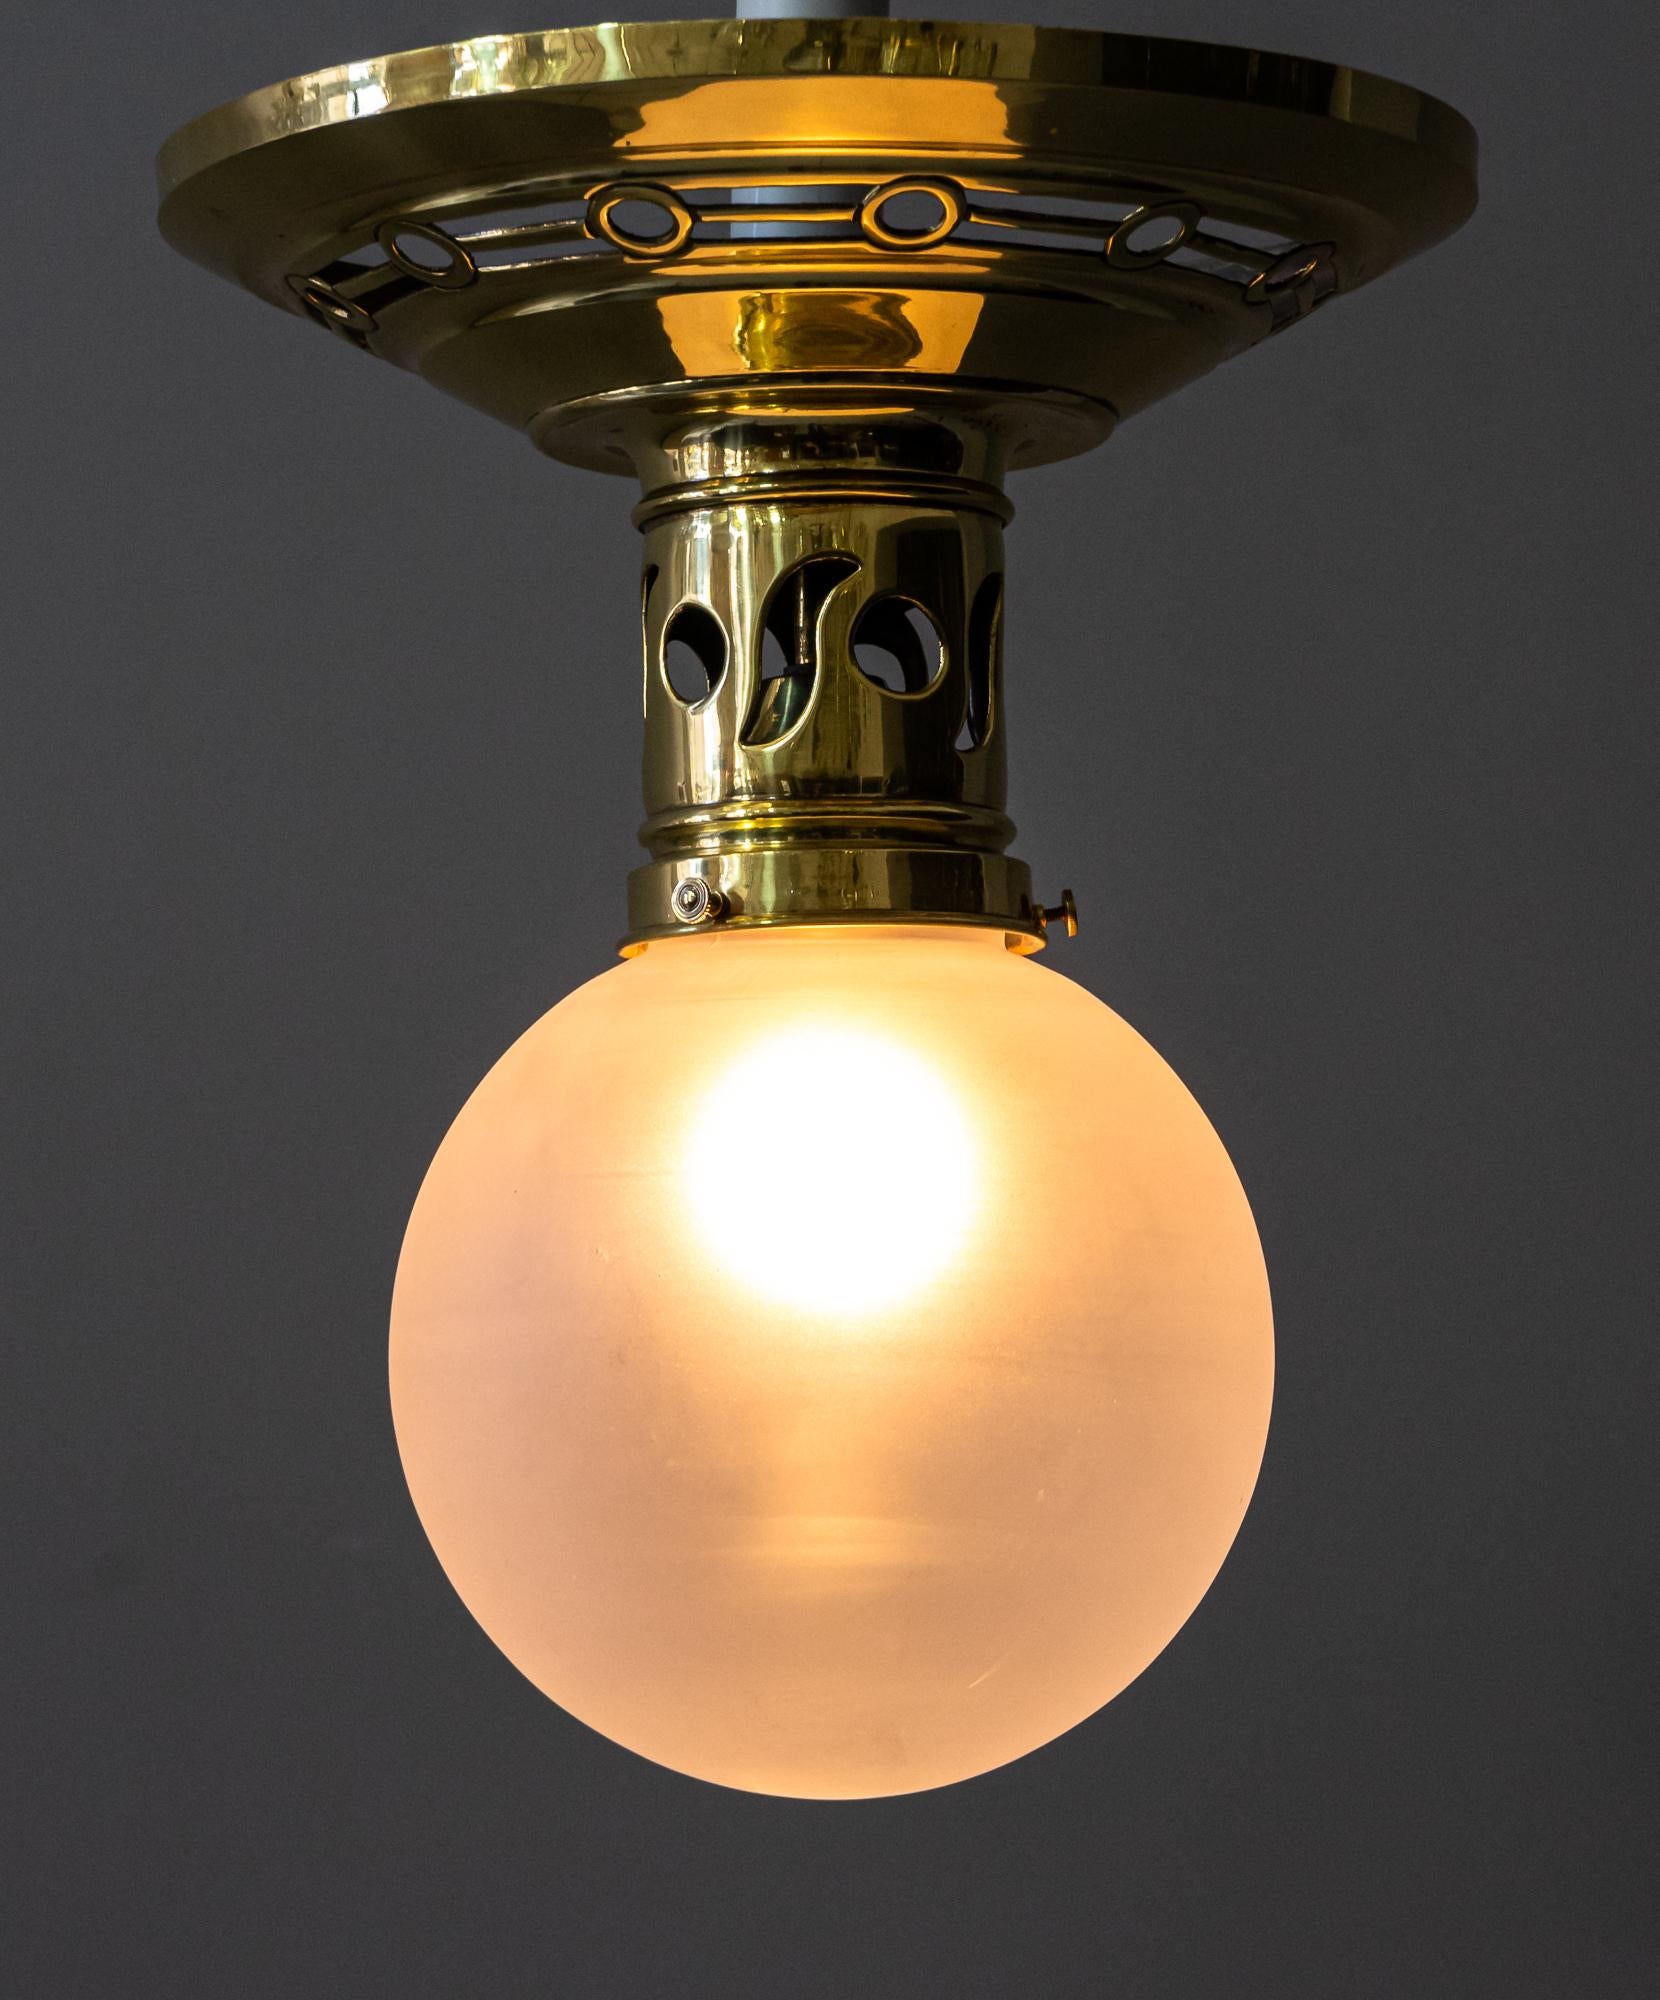 Jugendstil Ceiling Lamp circa 1908 with Original Opaline Glass Shade For Sale 5